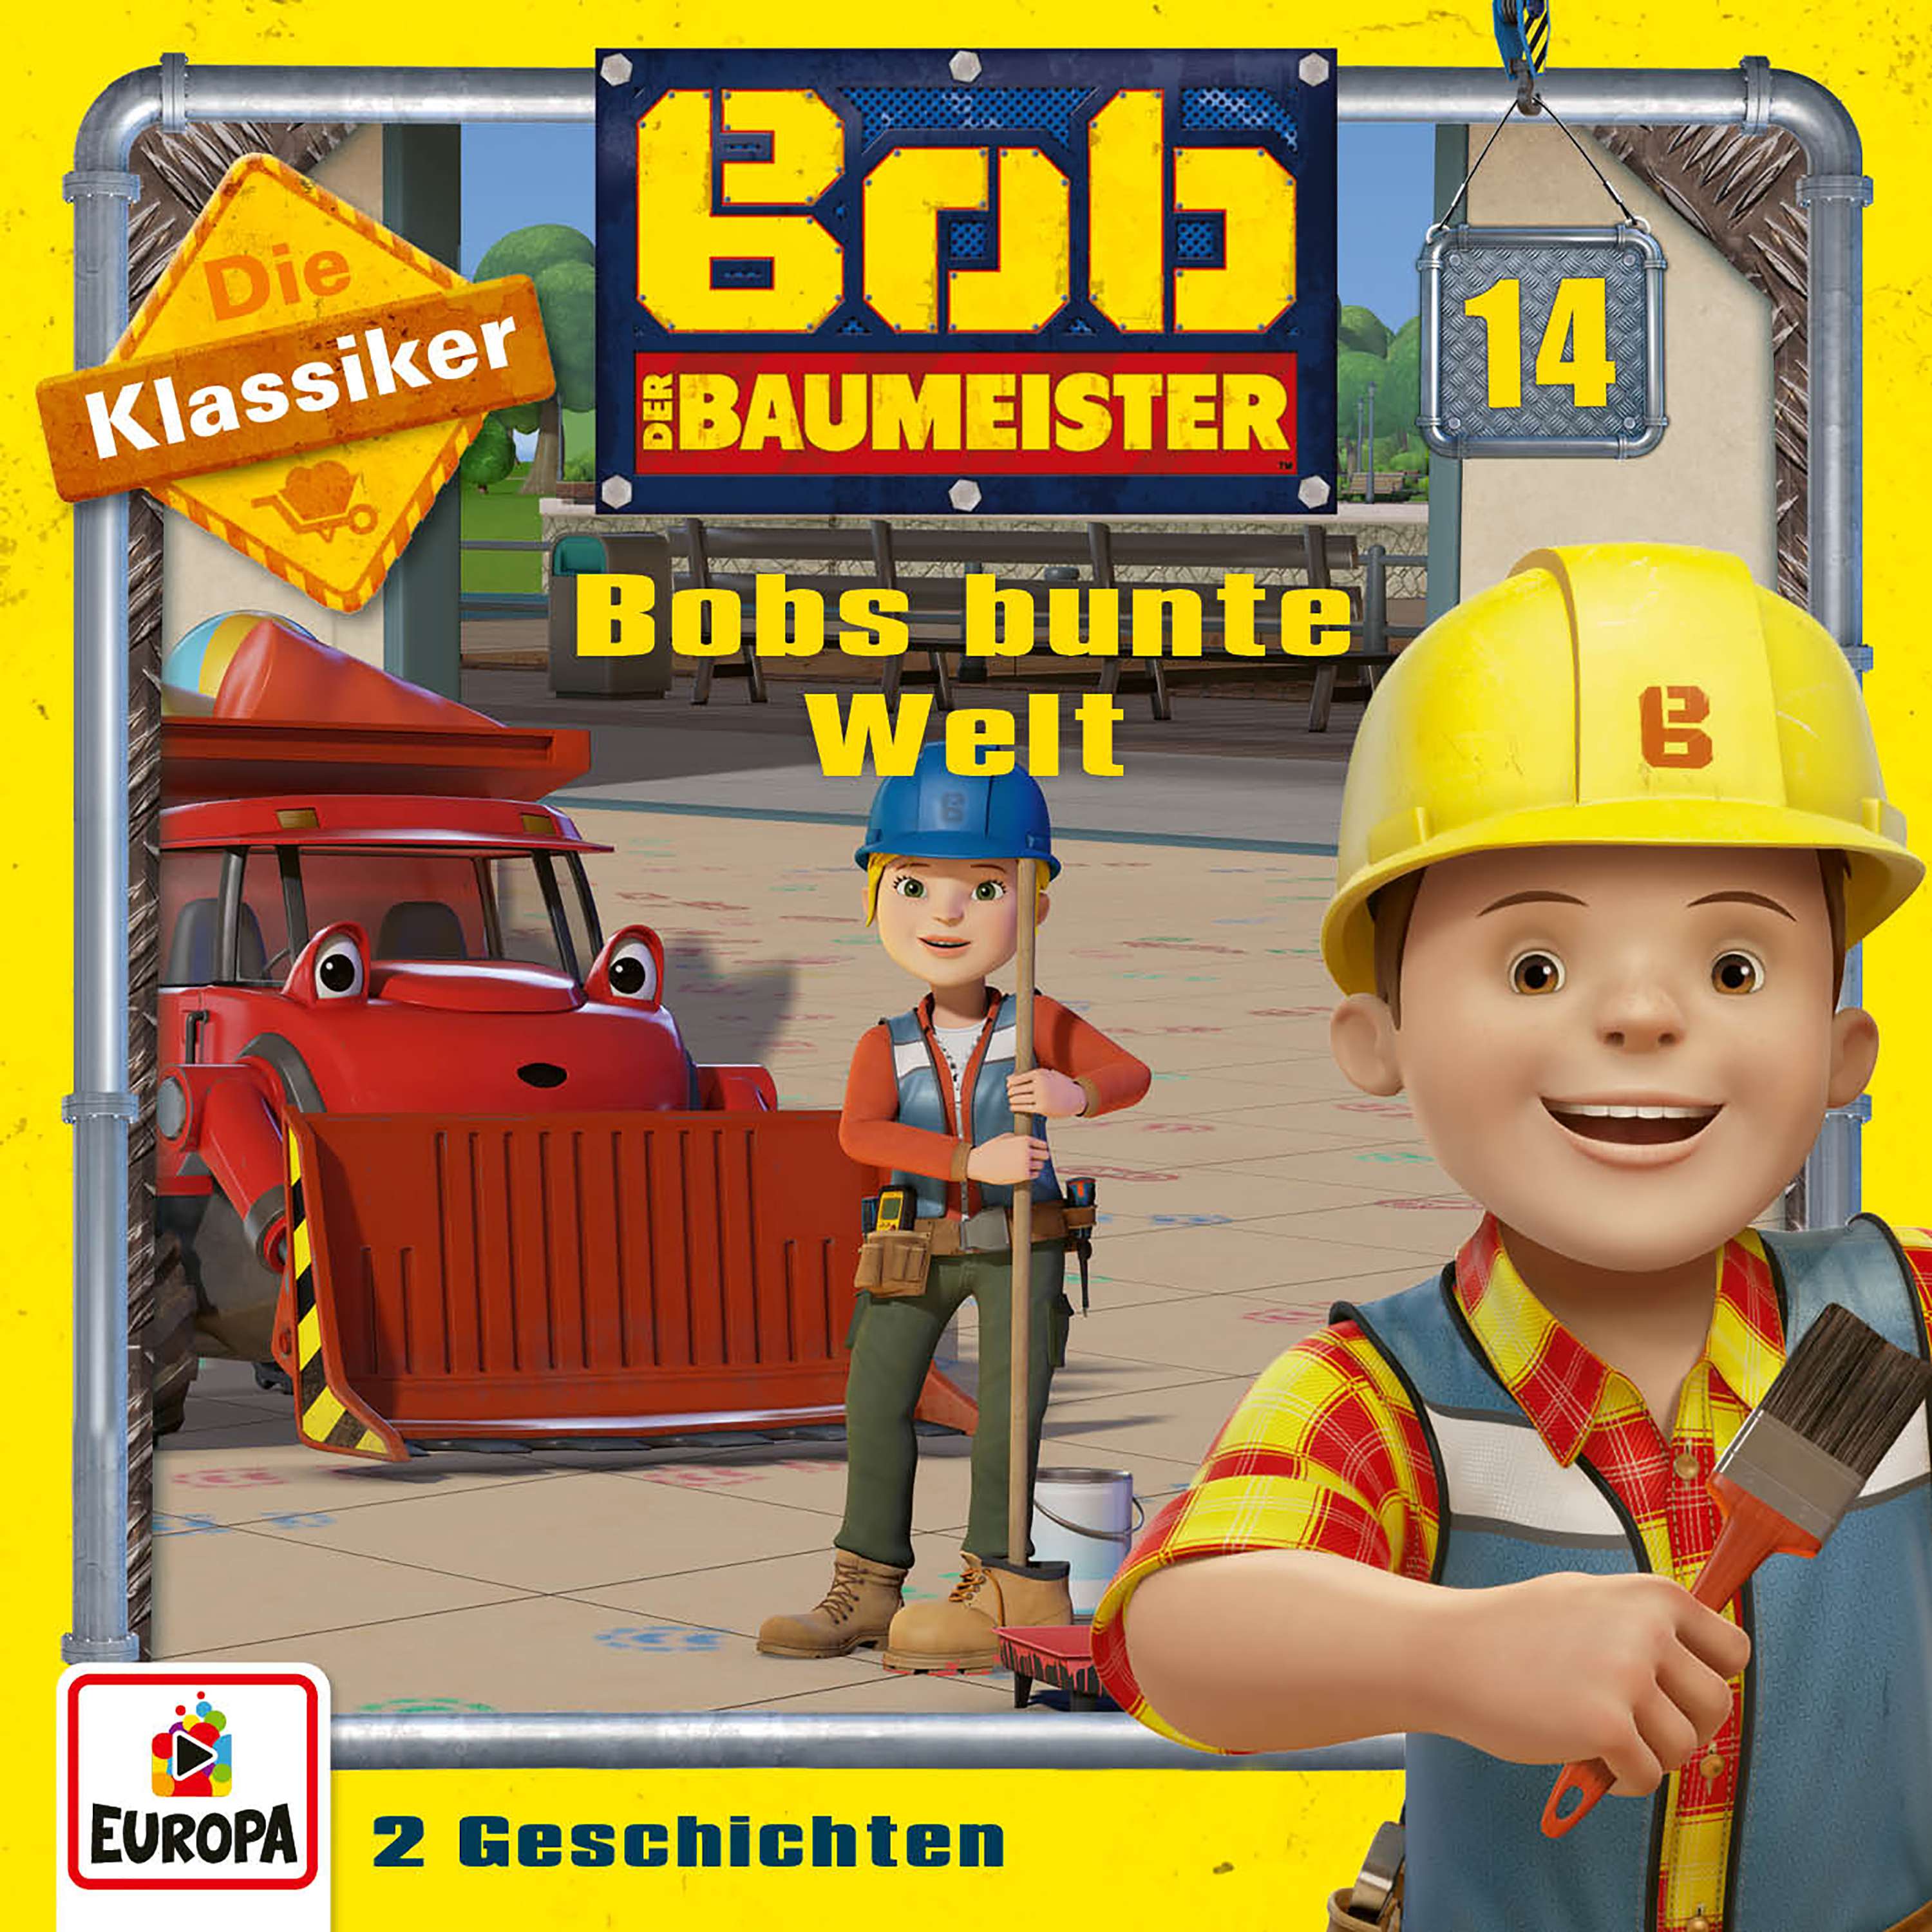 Bob der Baumeister - Bobs bunte Welt (Die Klassiker)